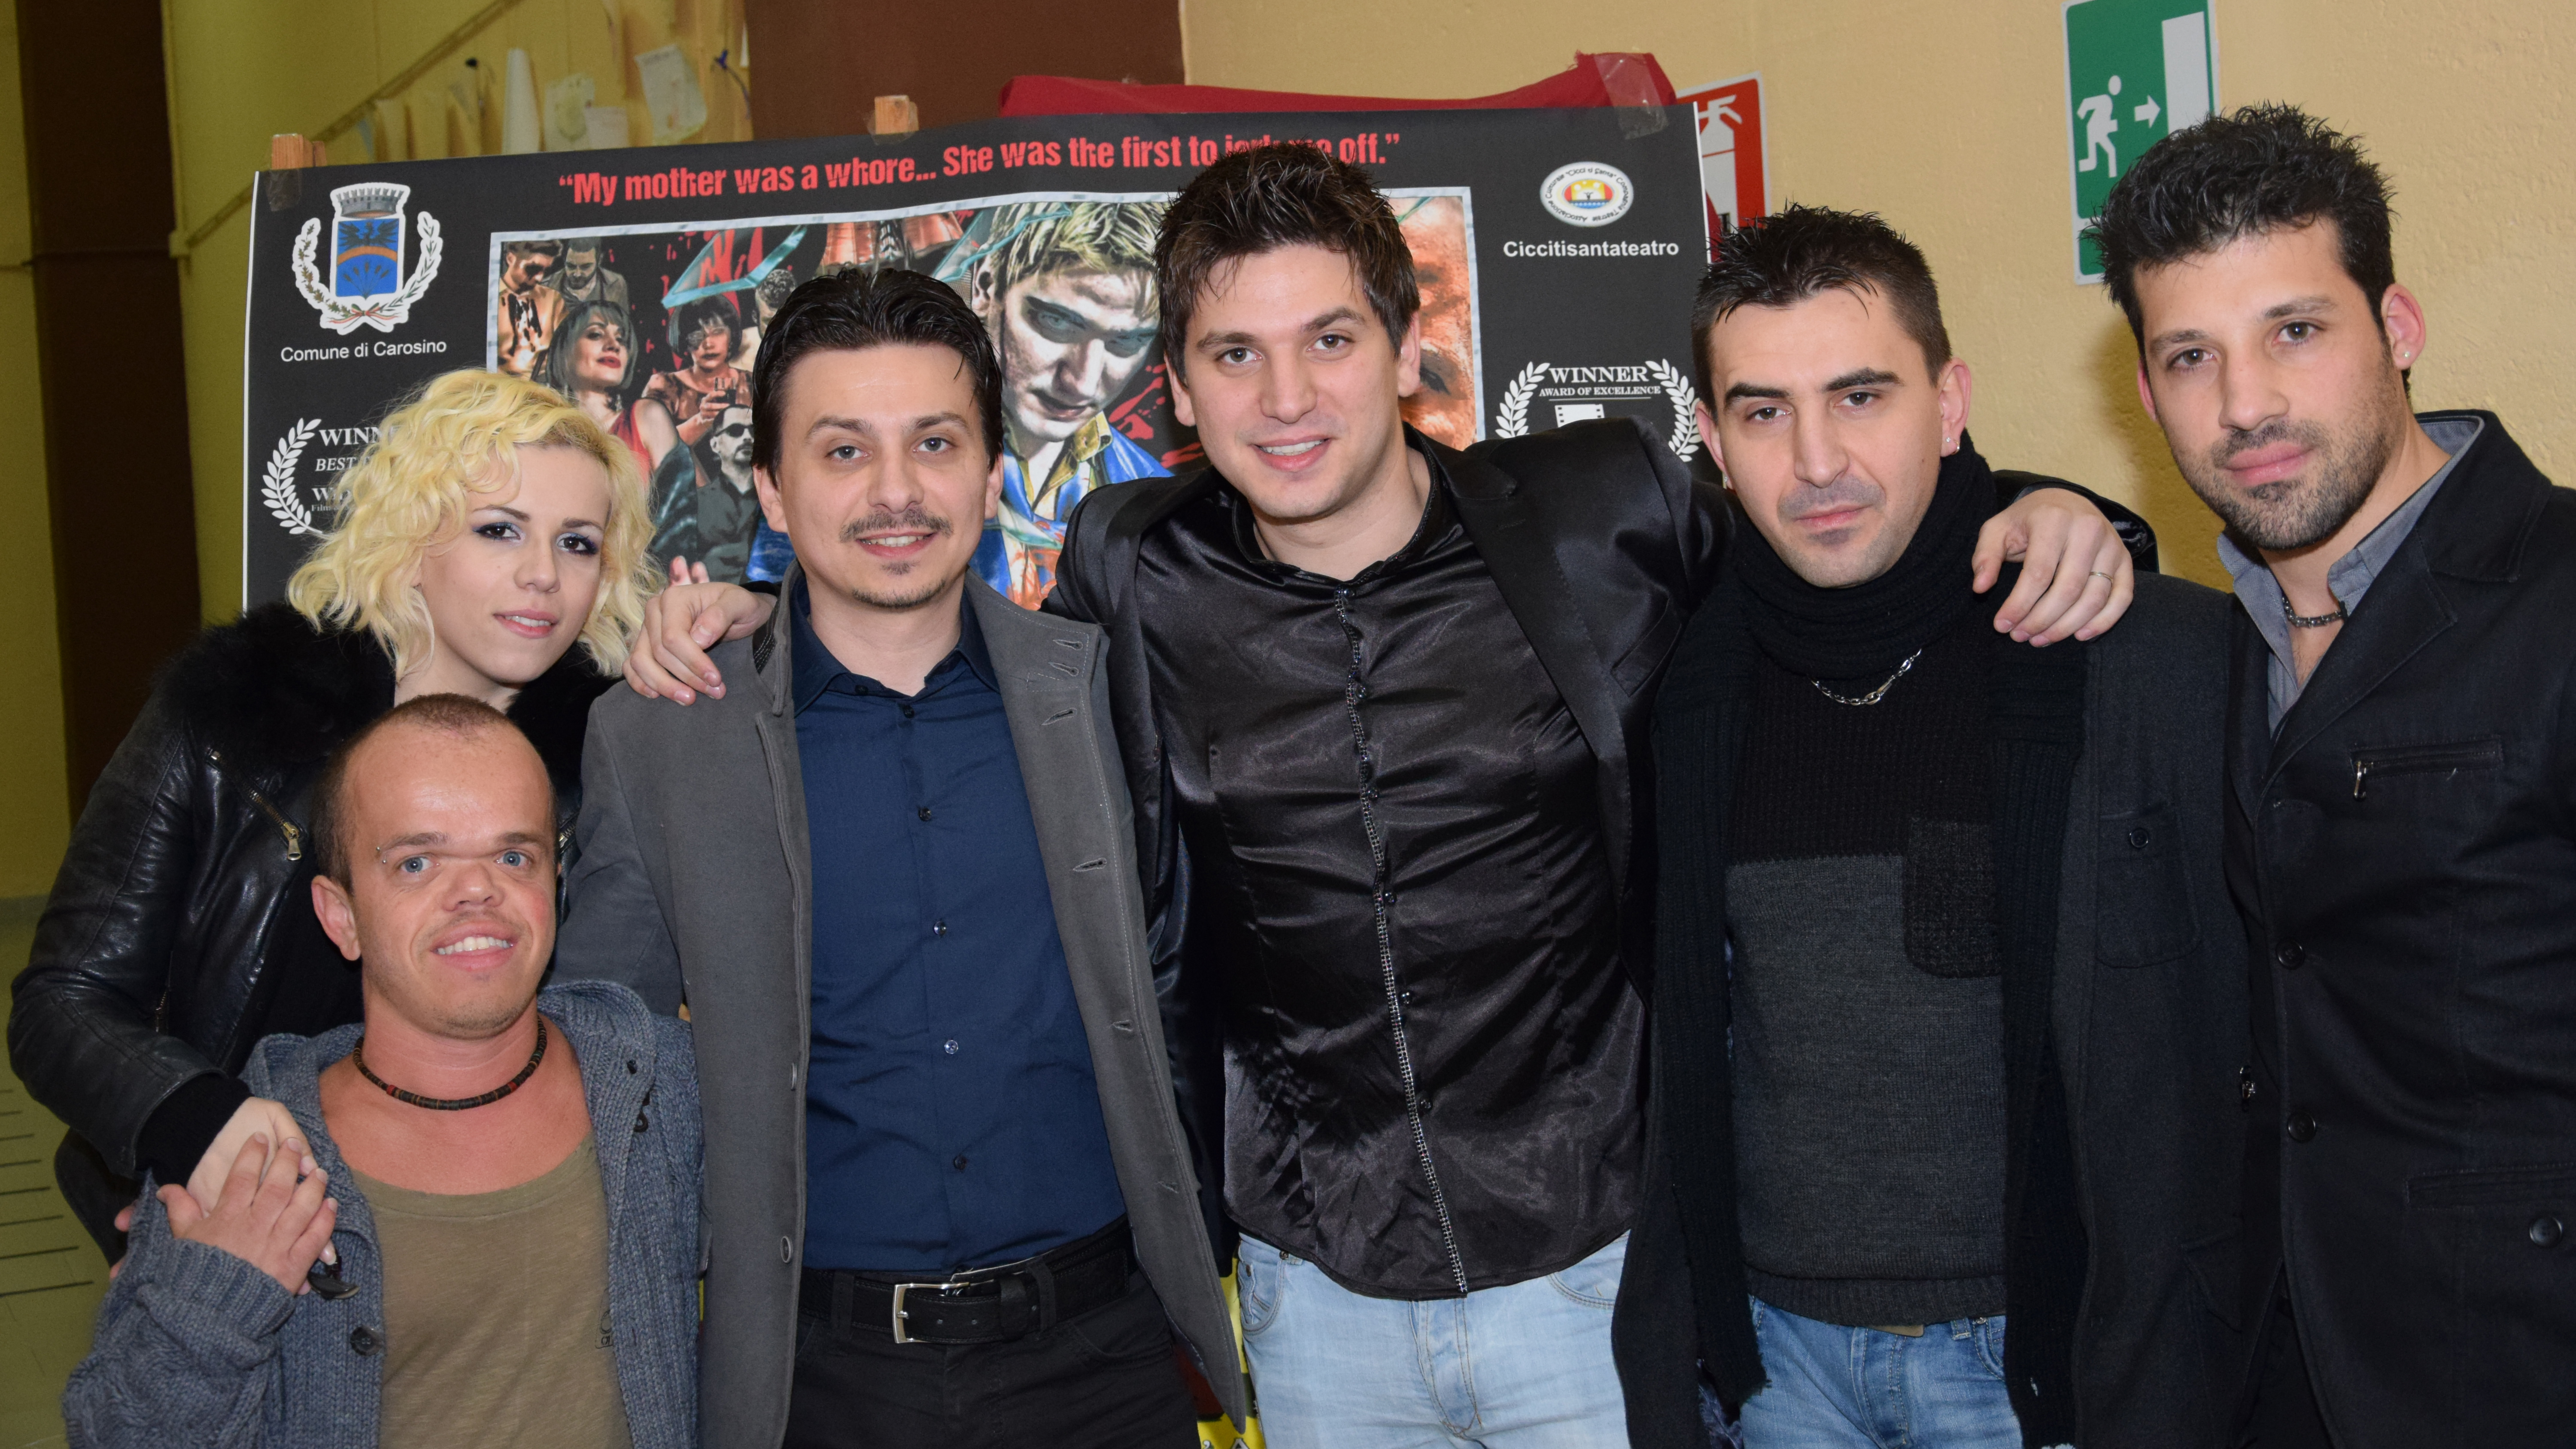 Lorenzo Del Conte, Mariantonietta Savino, Eros D'Antona, Roberto D'Antona, Mirko D'Antona and Roberto Marinelli at event of Insane (2015)